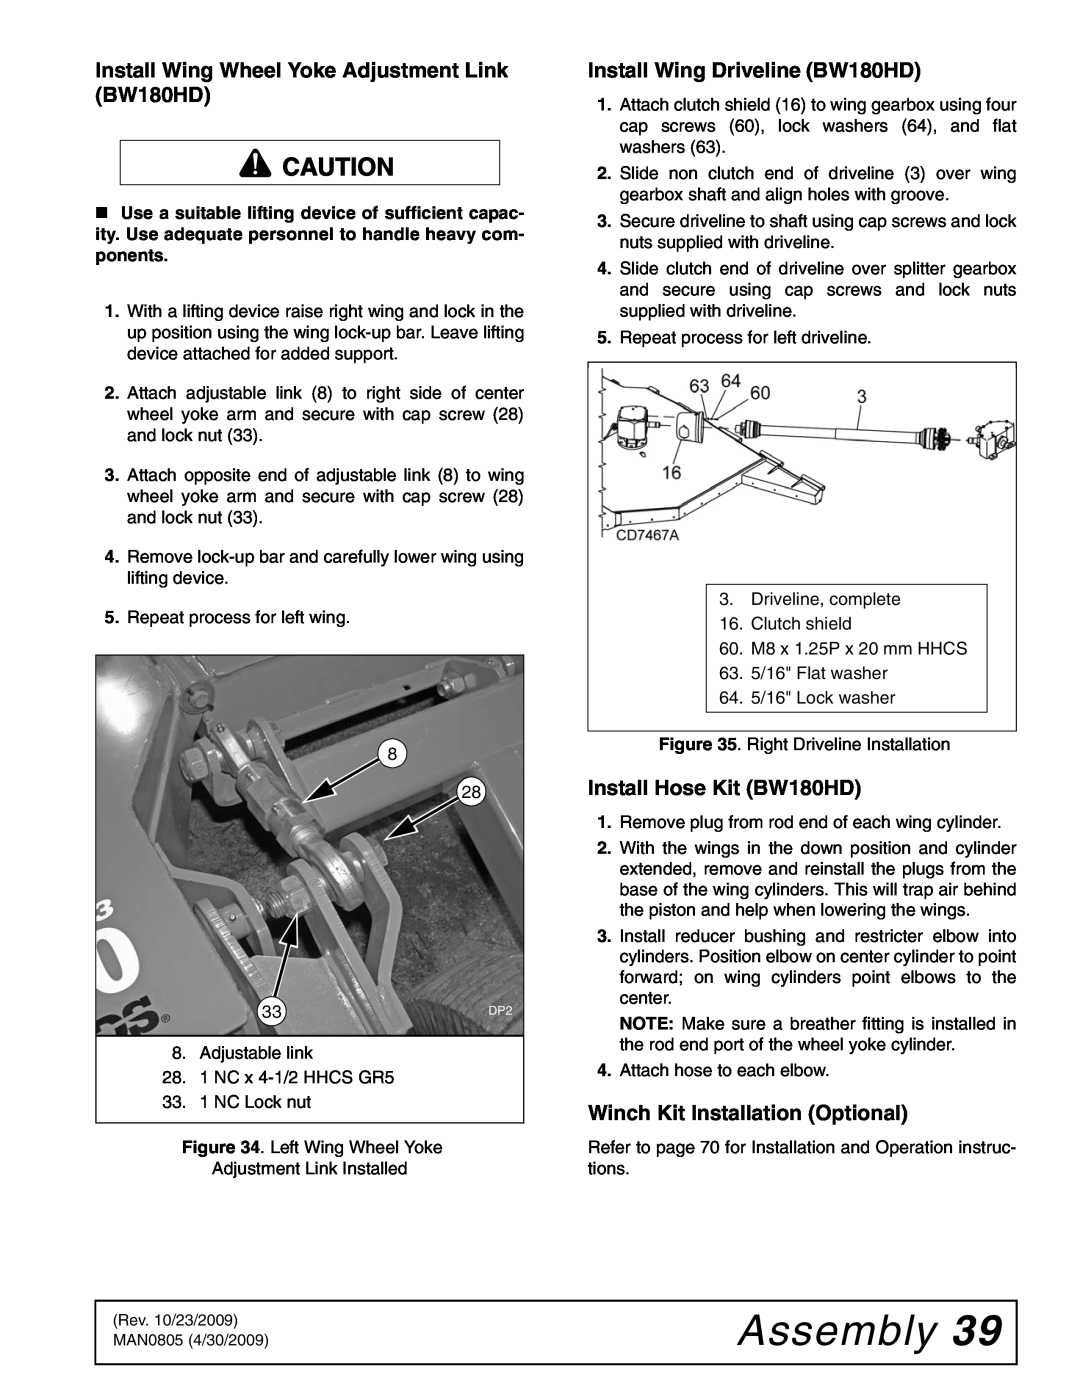 Woods Equipment BW180HBQ manual Assembly, Install Wing Wheel Yoke Adjustment Link BW180HD, Install Wing Driveline BW180HD 